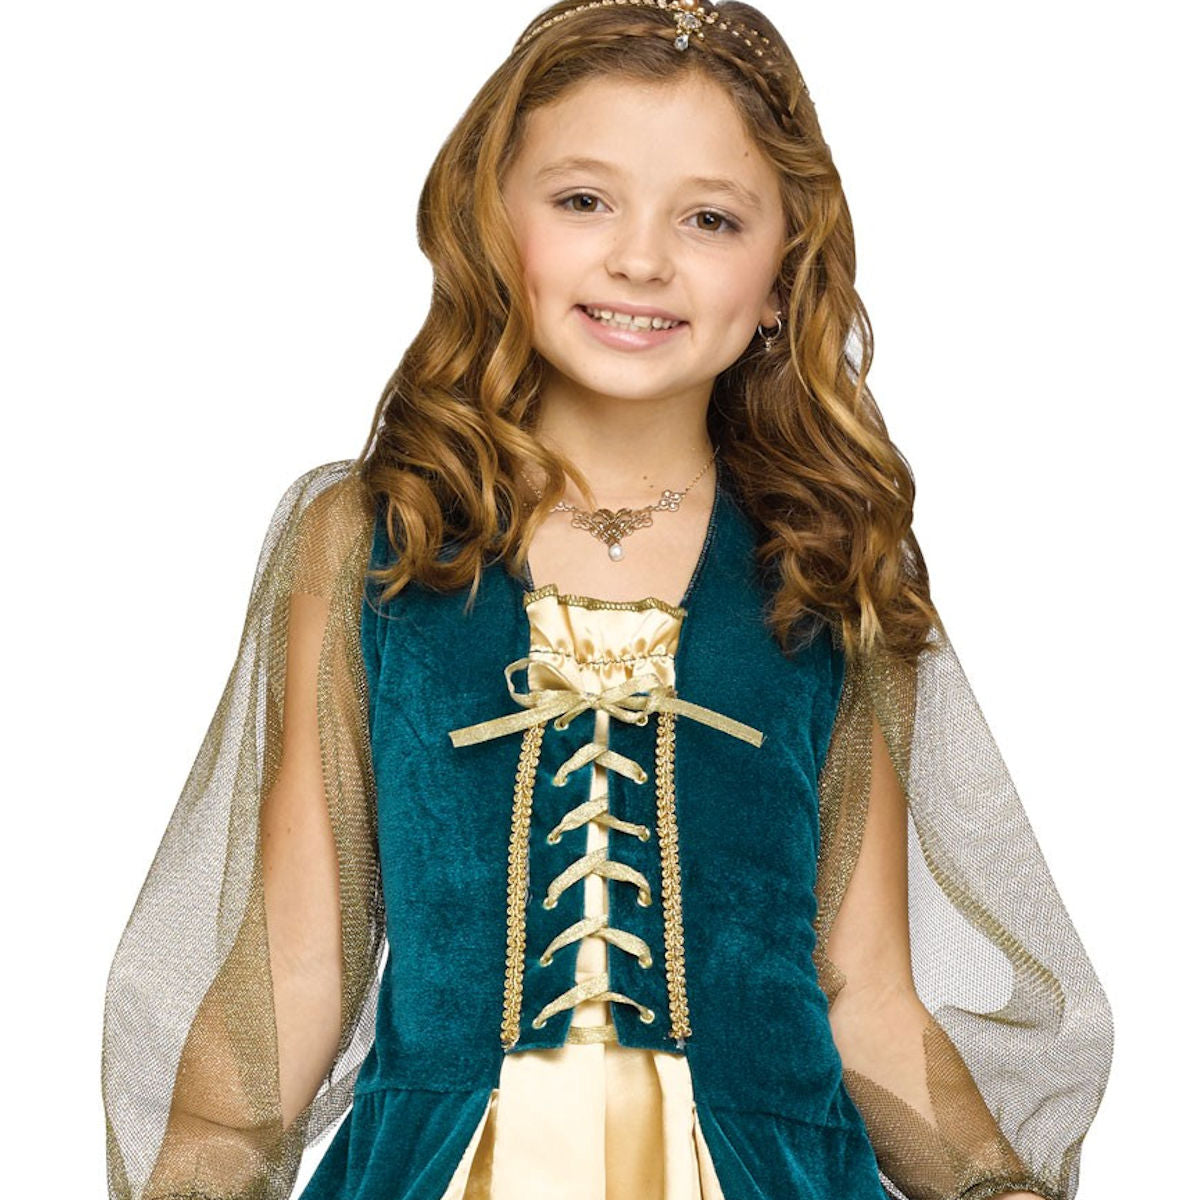 Medieval Juliet Fairytale Princess Girls Costume